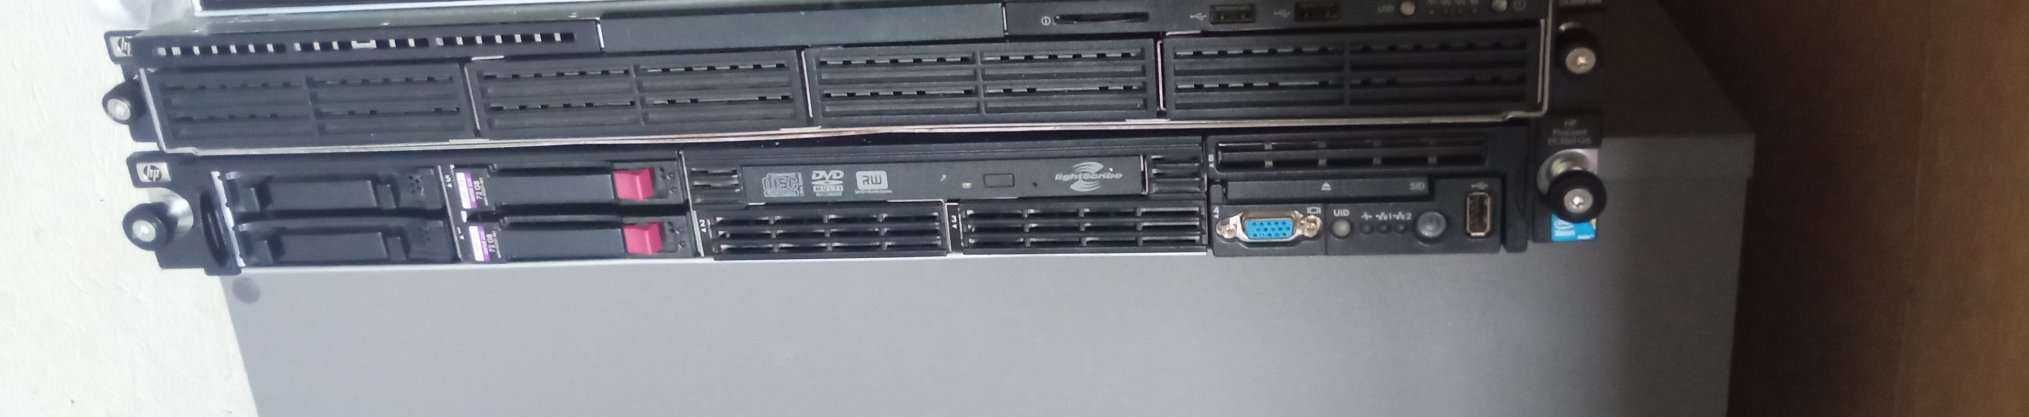 Сервер HP DL360 G6, 144GB RAM, 2x300GB HDD SAS2.5"